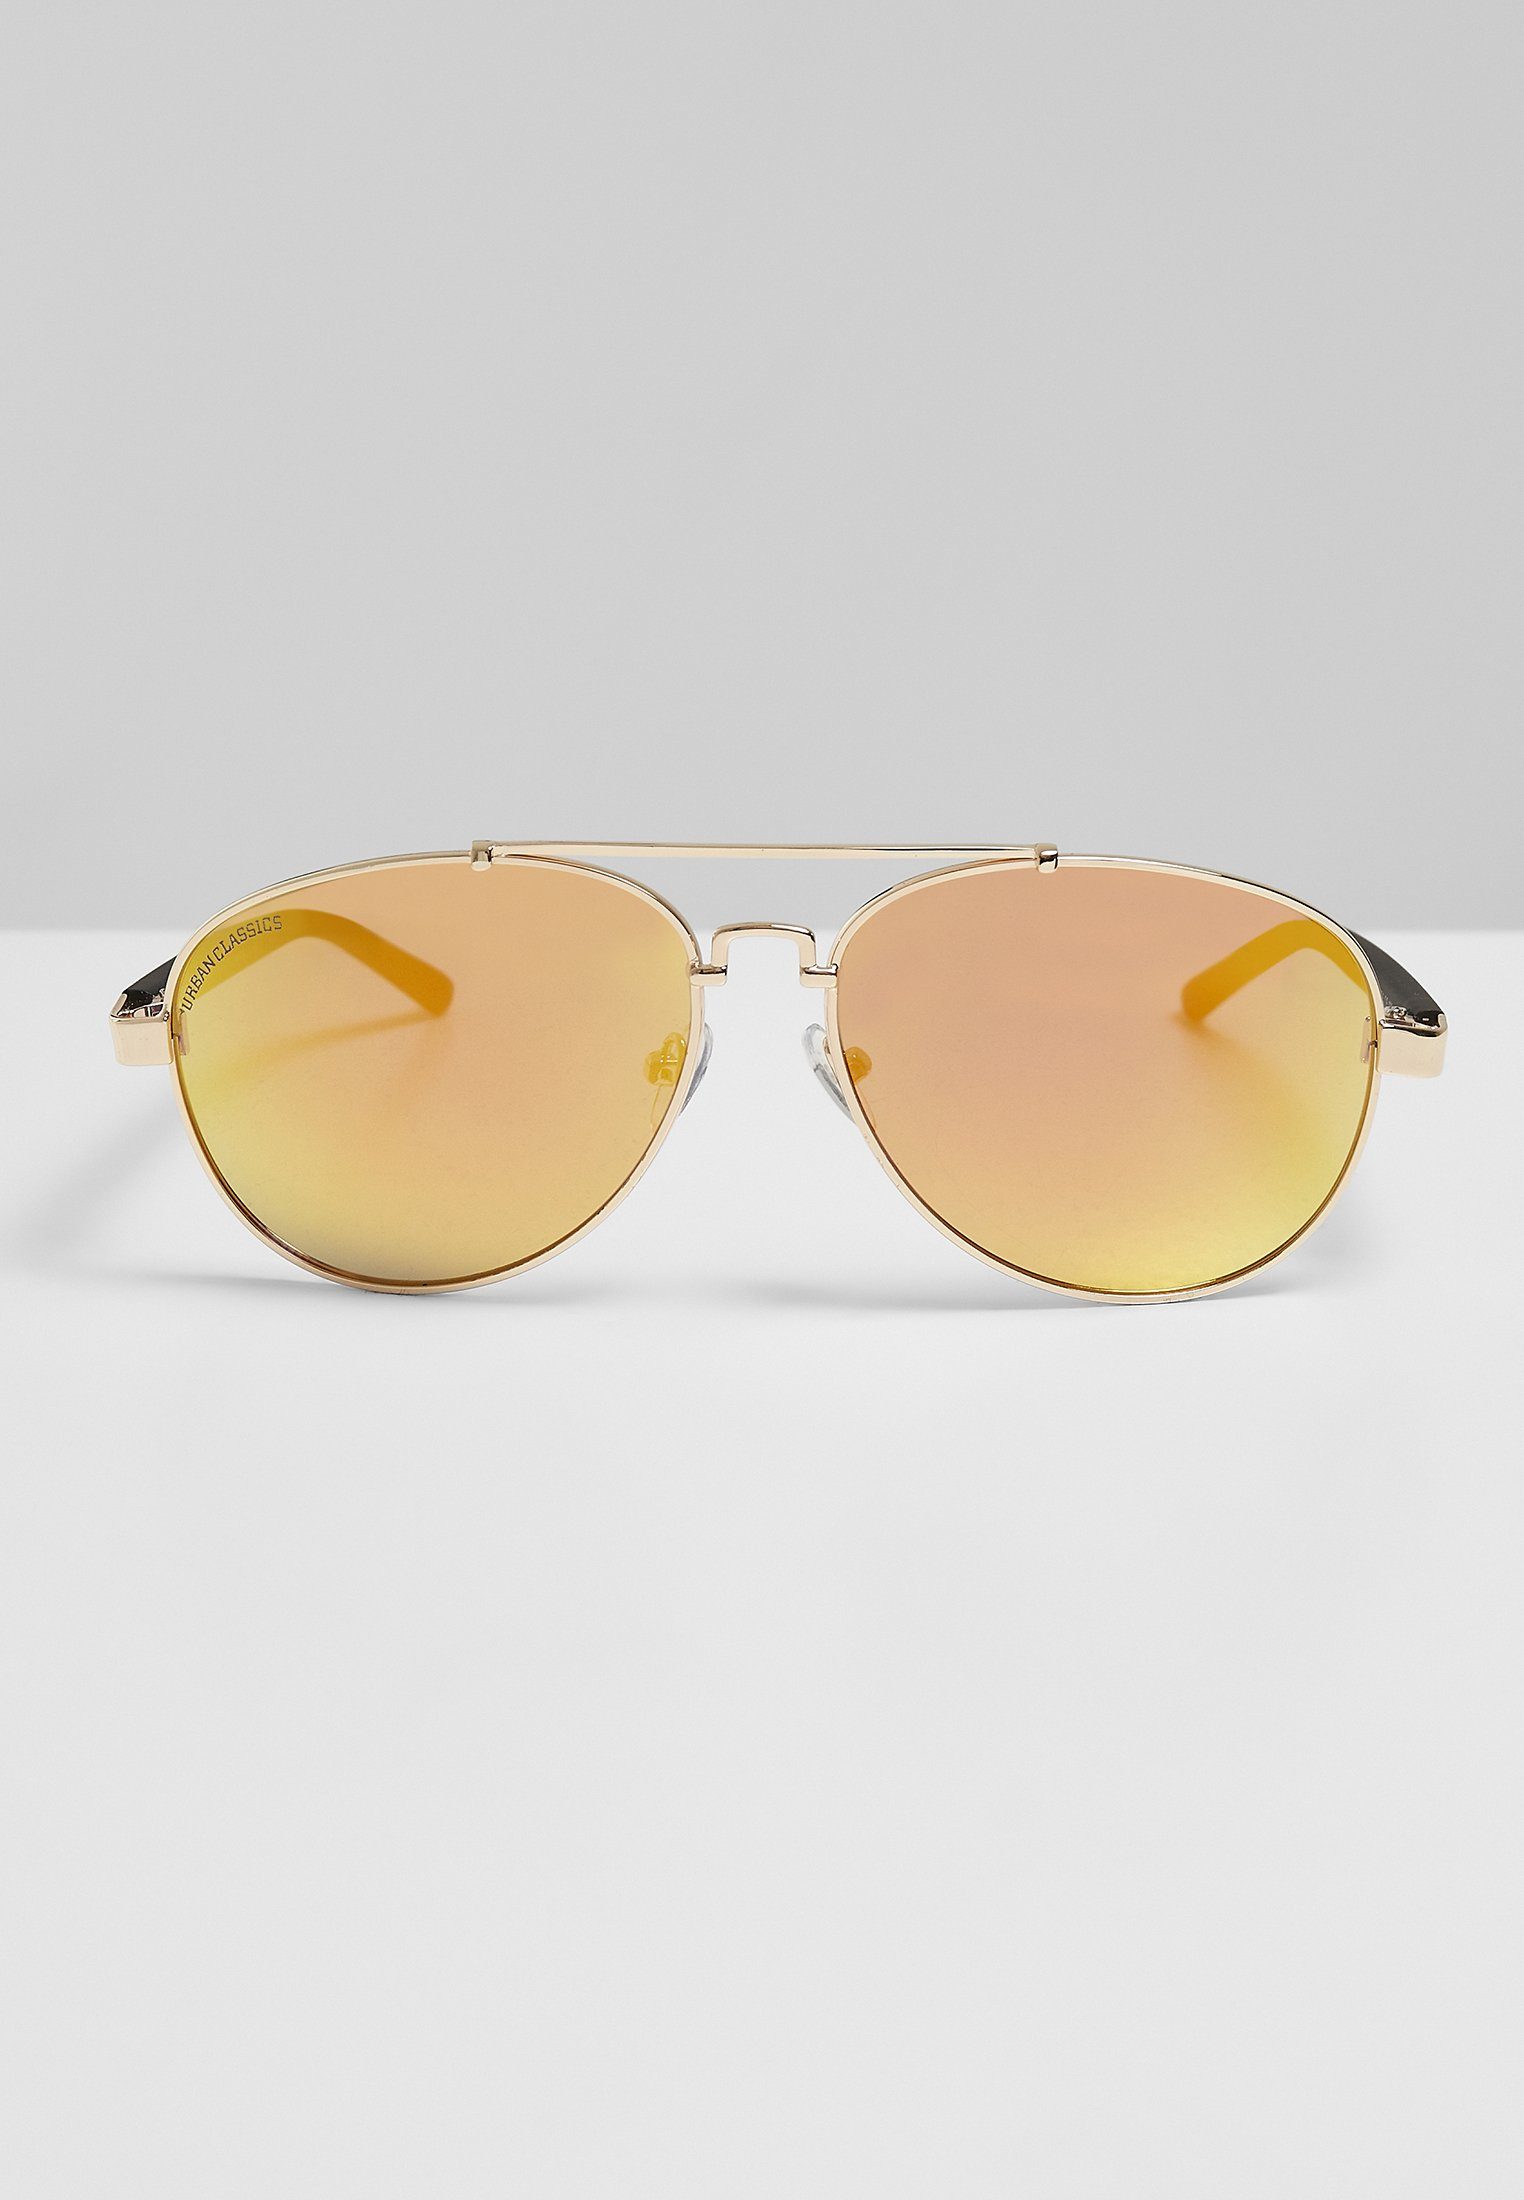 URBAN Mirror Accessoires Sunglasses gold/orange CLASSICS Sonnenbrille Mumbo UC